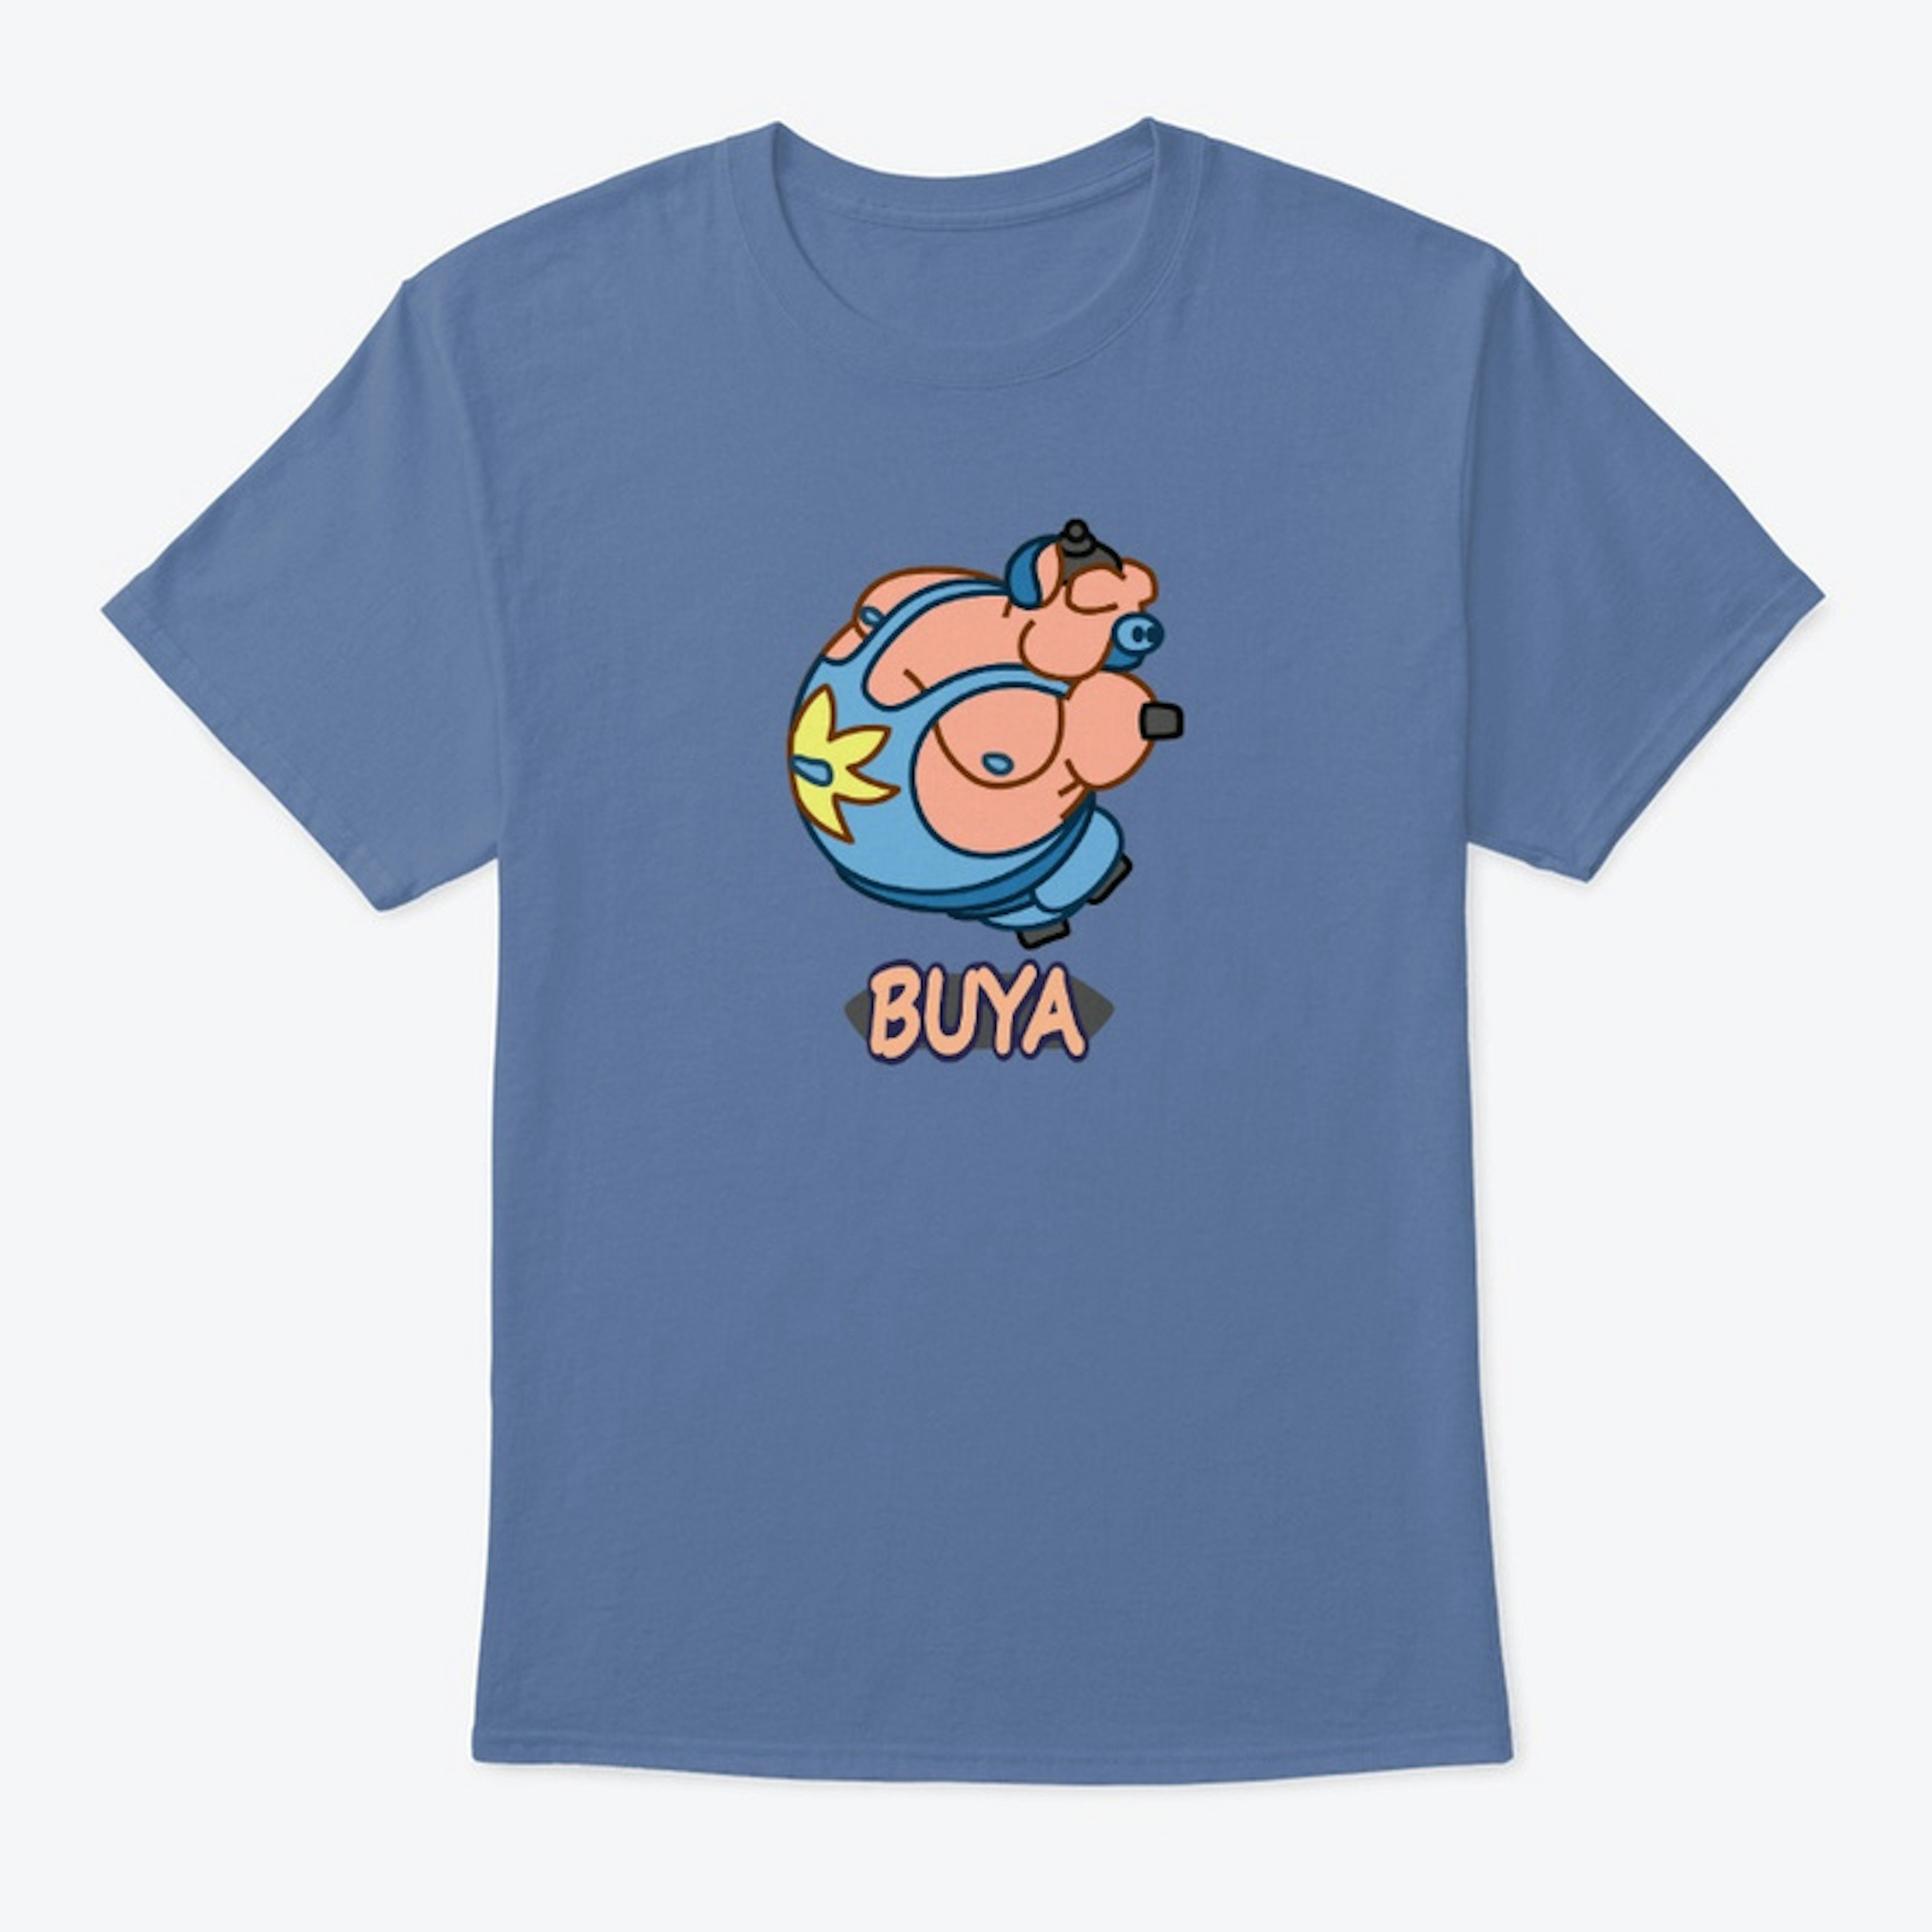 Buya shirt